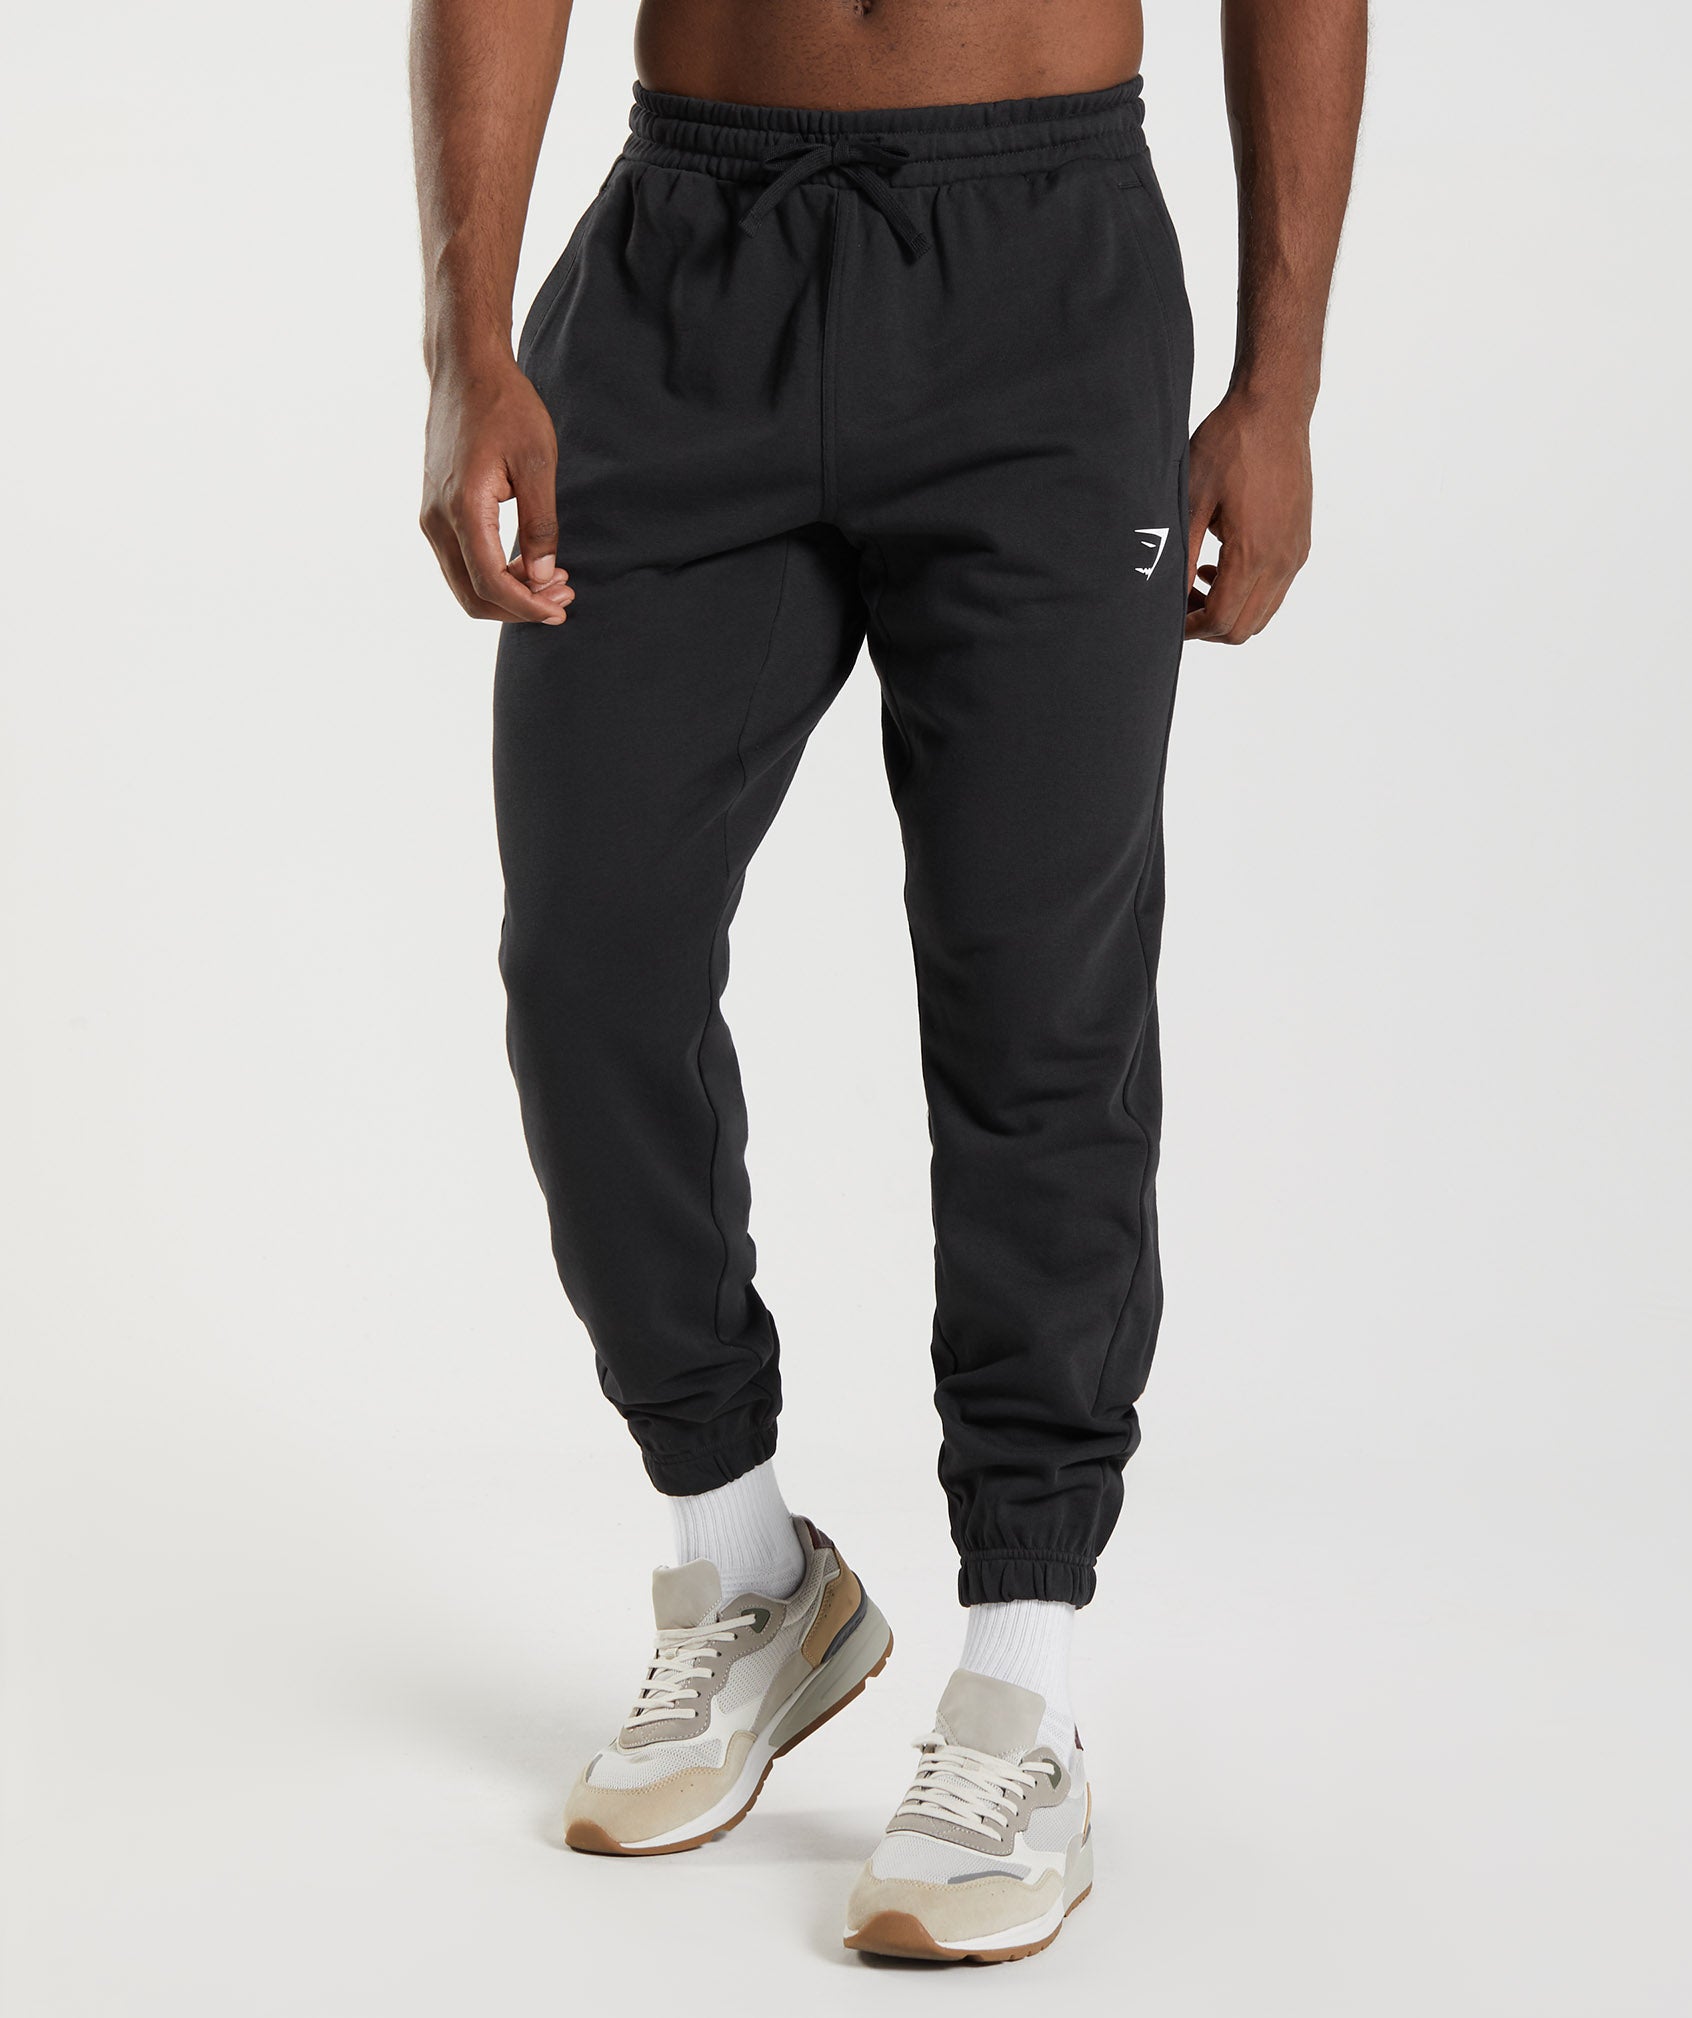 Mens Joggers Trousers Gym Sport Casual Sweat Track Pants Cuffed Hem W Zip  Pocket Pants - Walmart.com